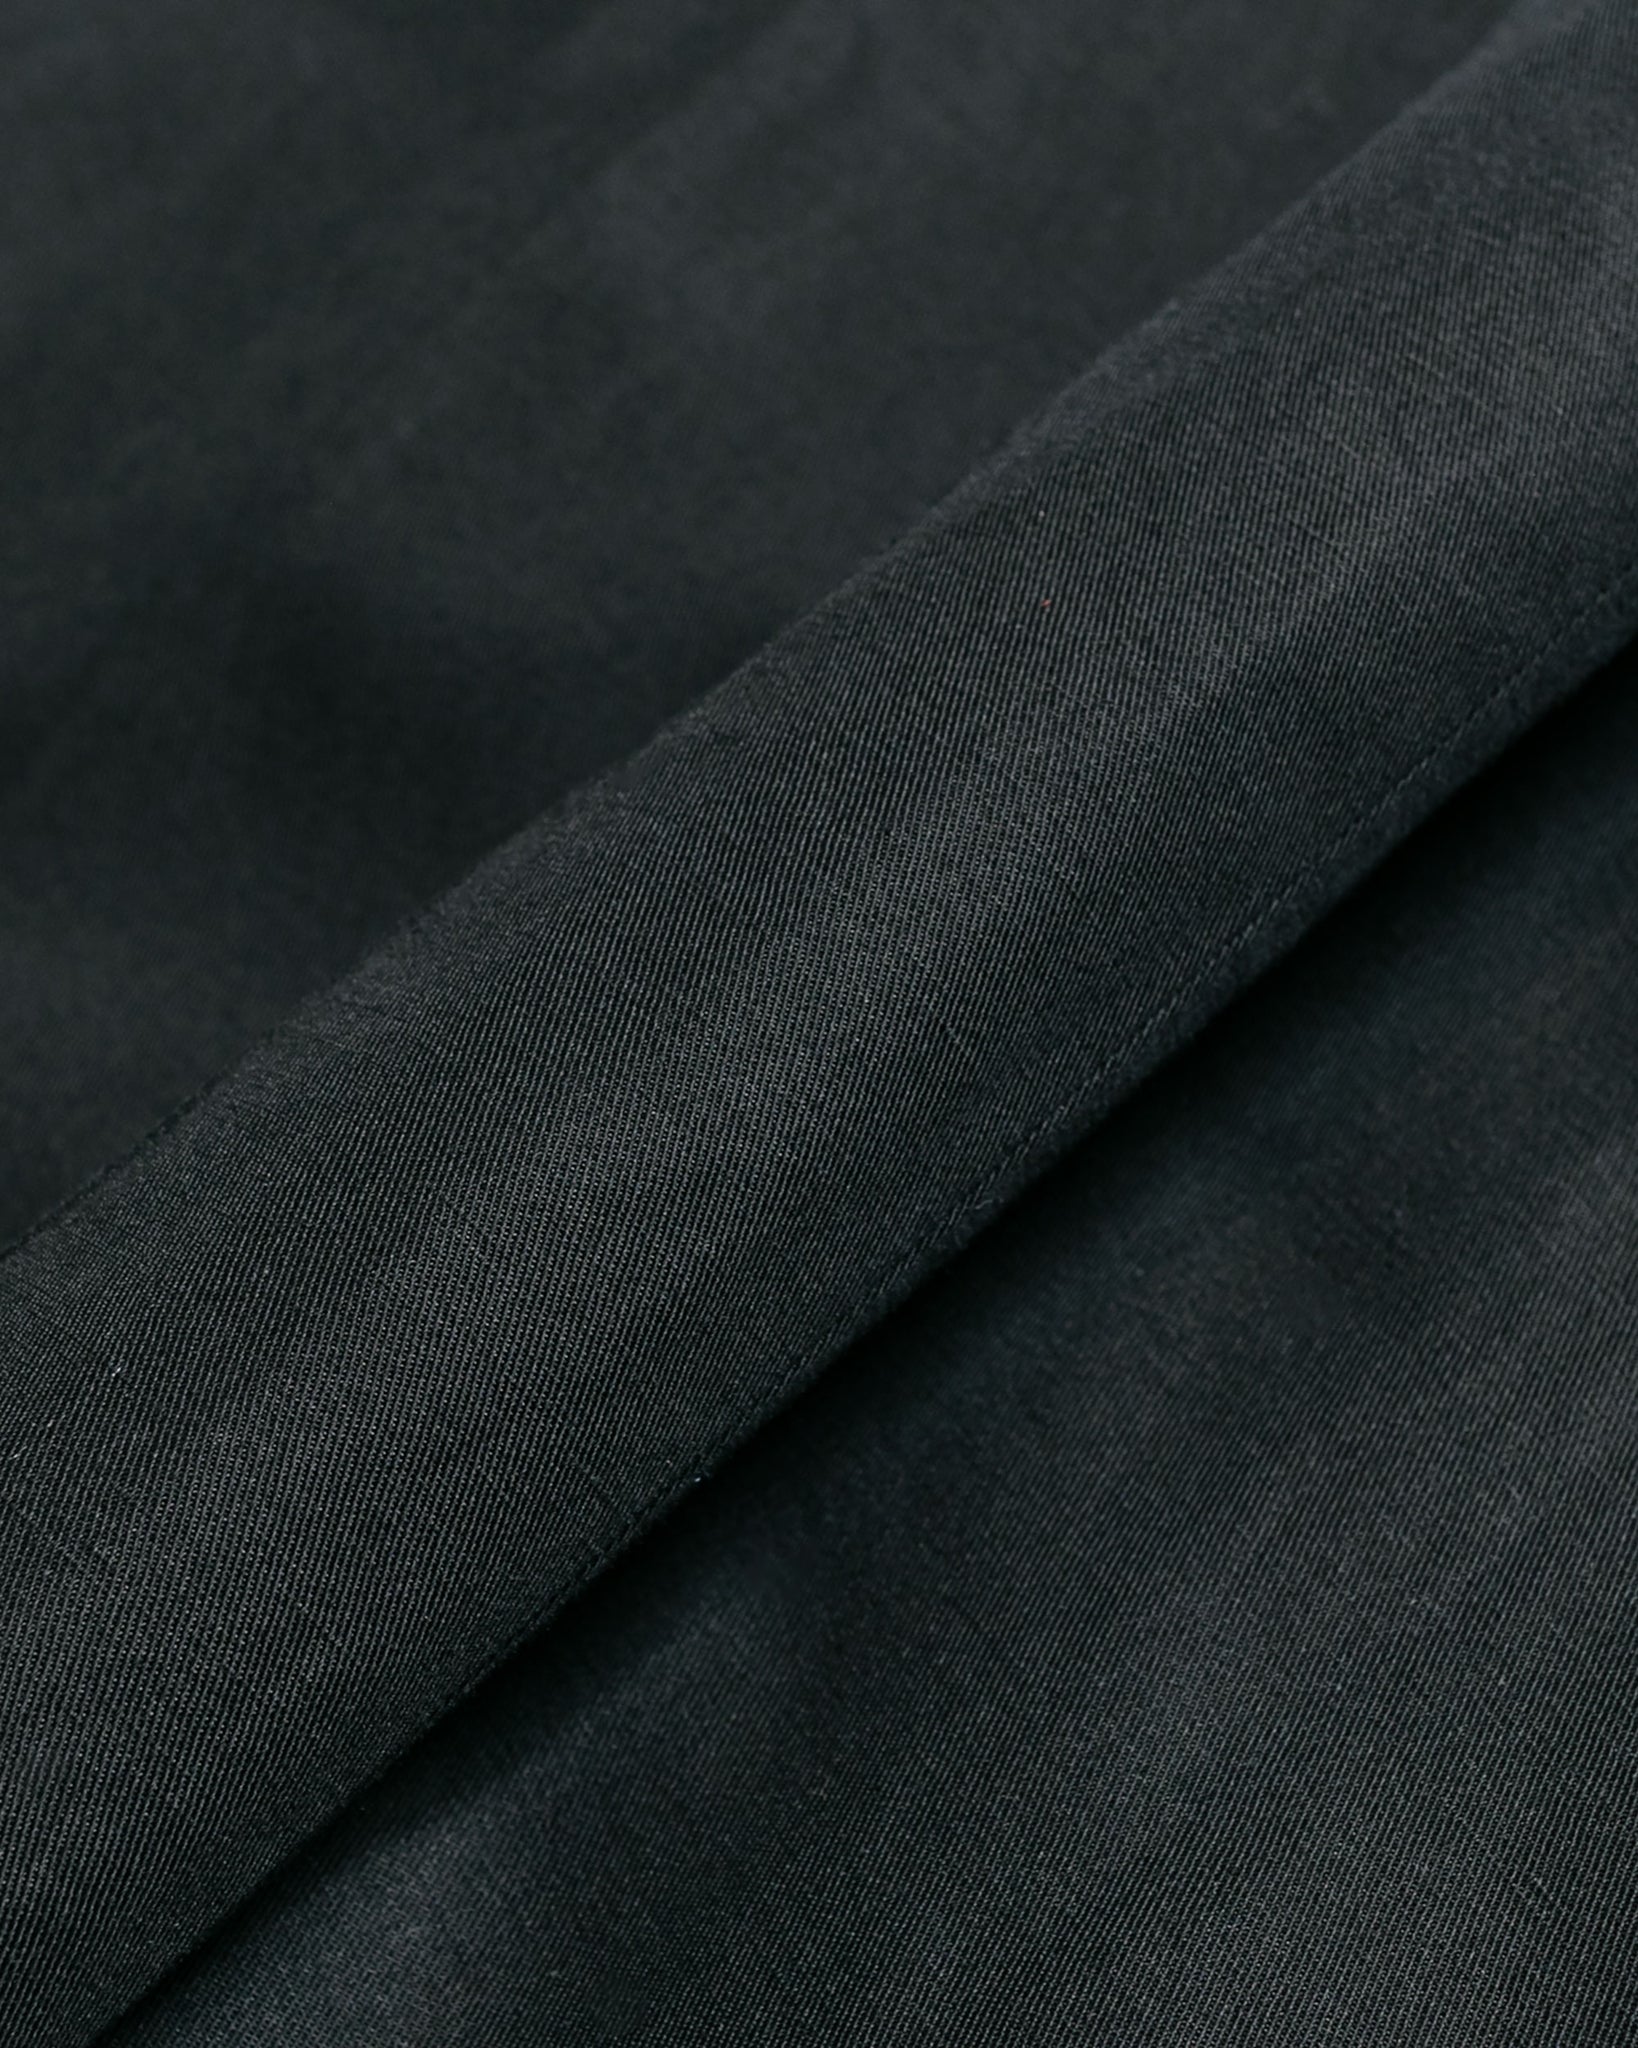 Auralee Hard Twist Finx Linen Chino Slacks Black fabric